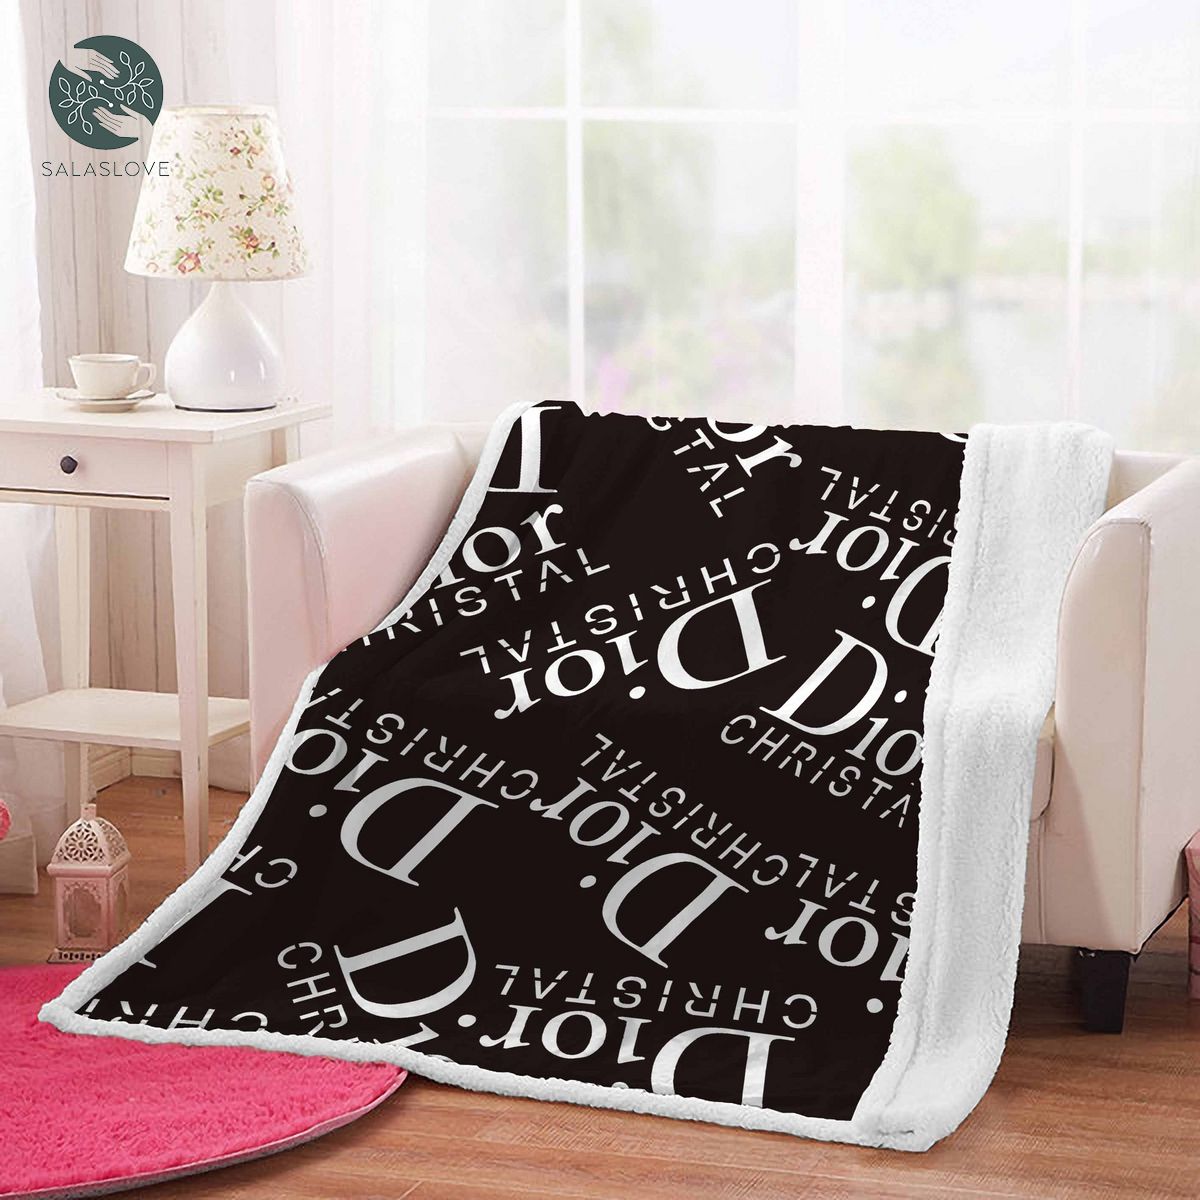  Luxruy Bedding Dior Blanket Bedroom Blanket